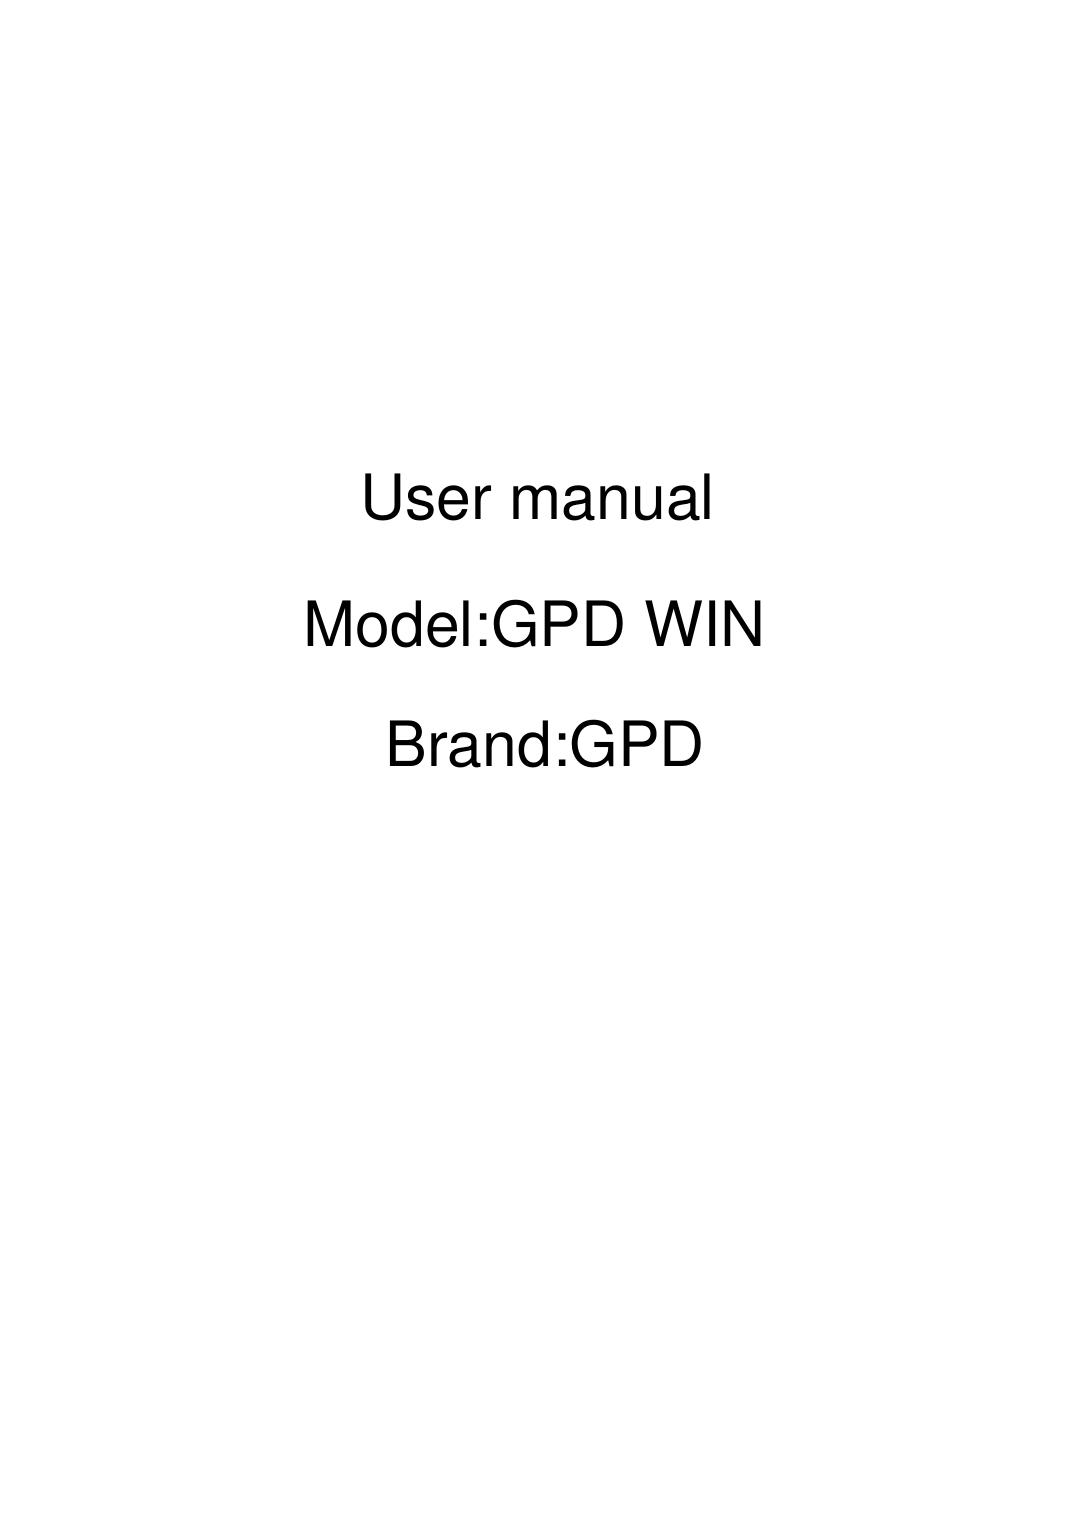 User manualModel:GPD WINBrand:GPD